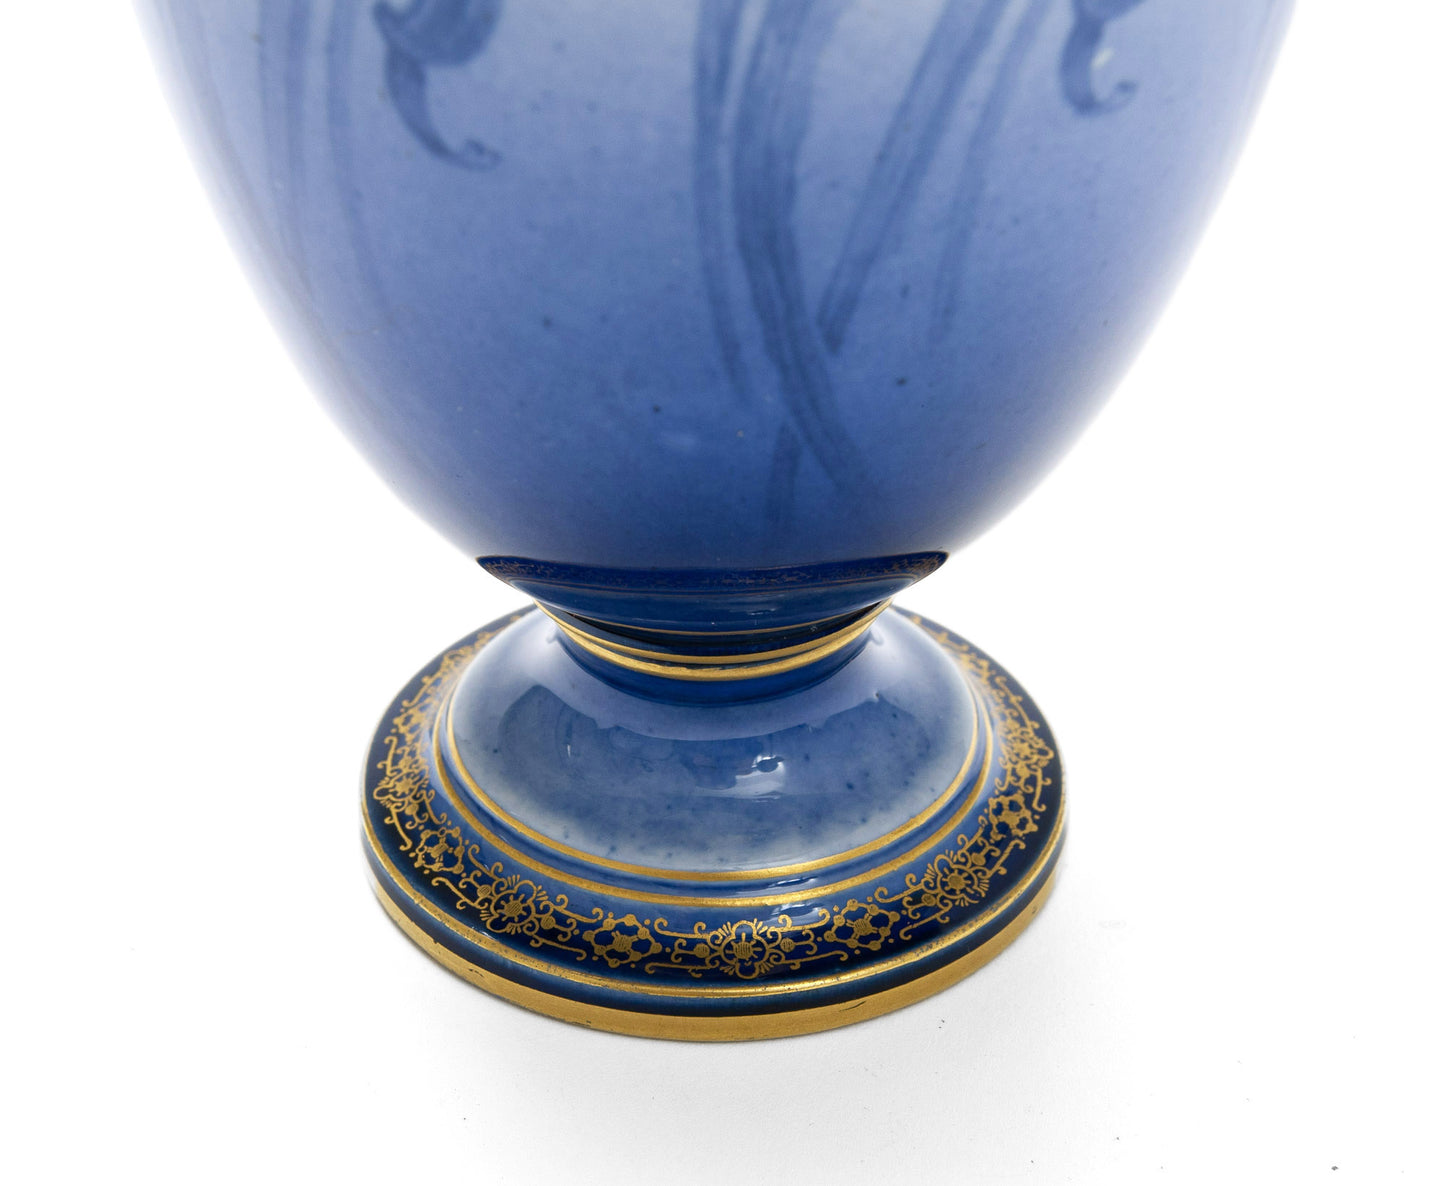 Antique Royal Worcester China Sabrina Ware Art Nouveau Blue Iris Vase c1896 (Code 2103)